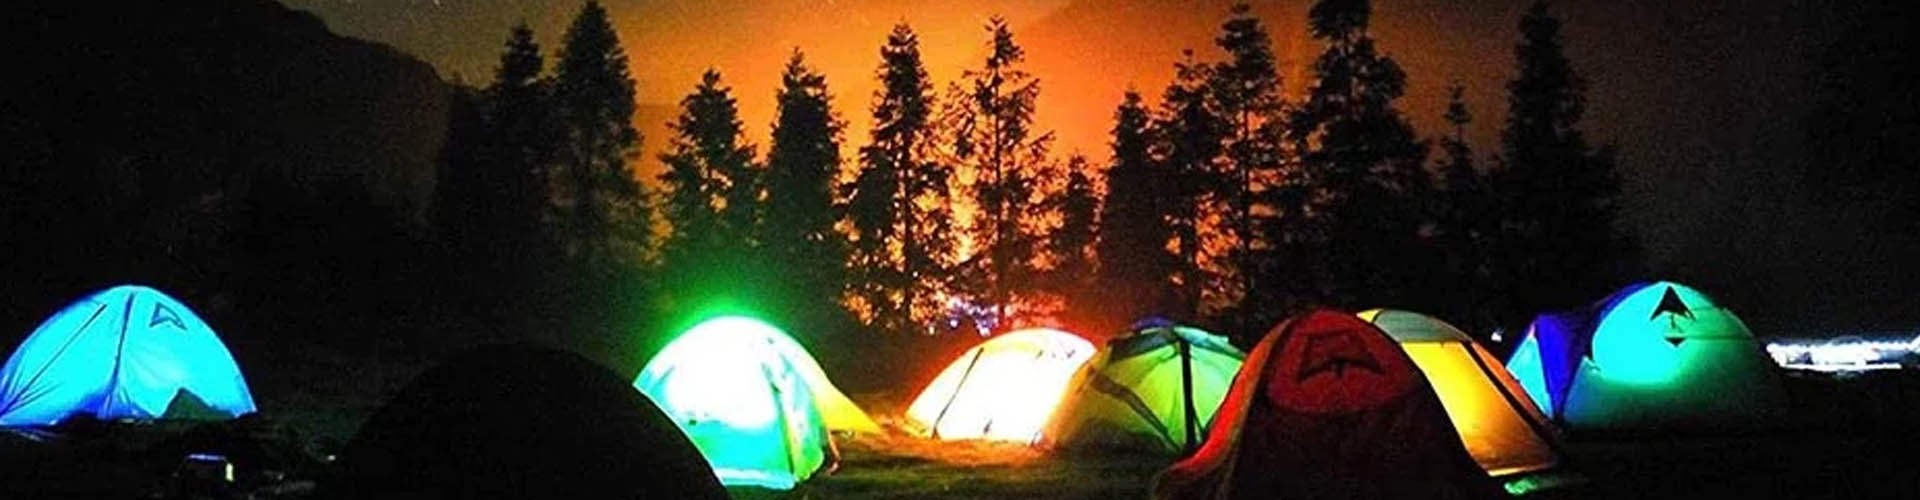 outdoor camping light